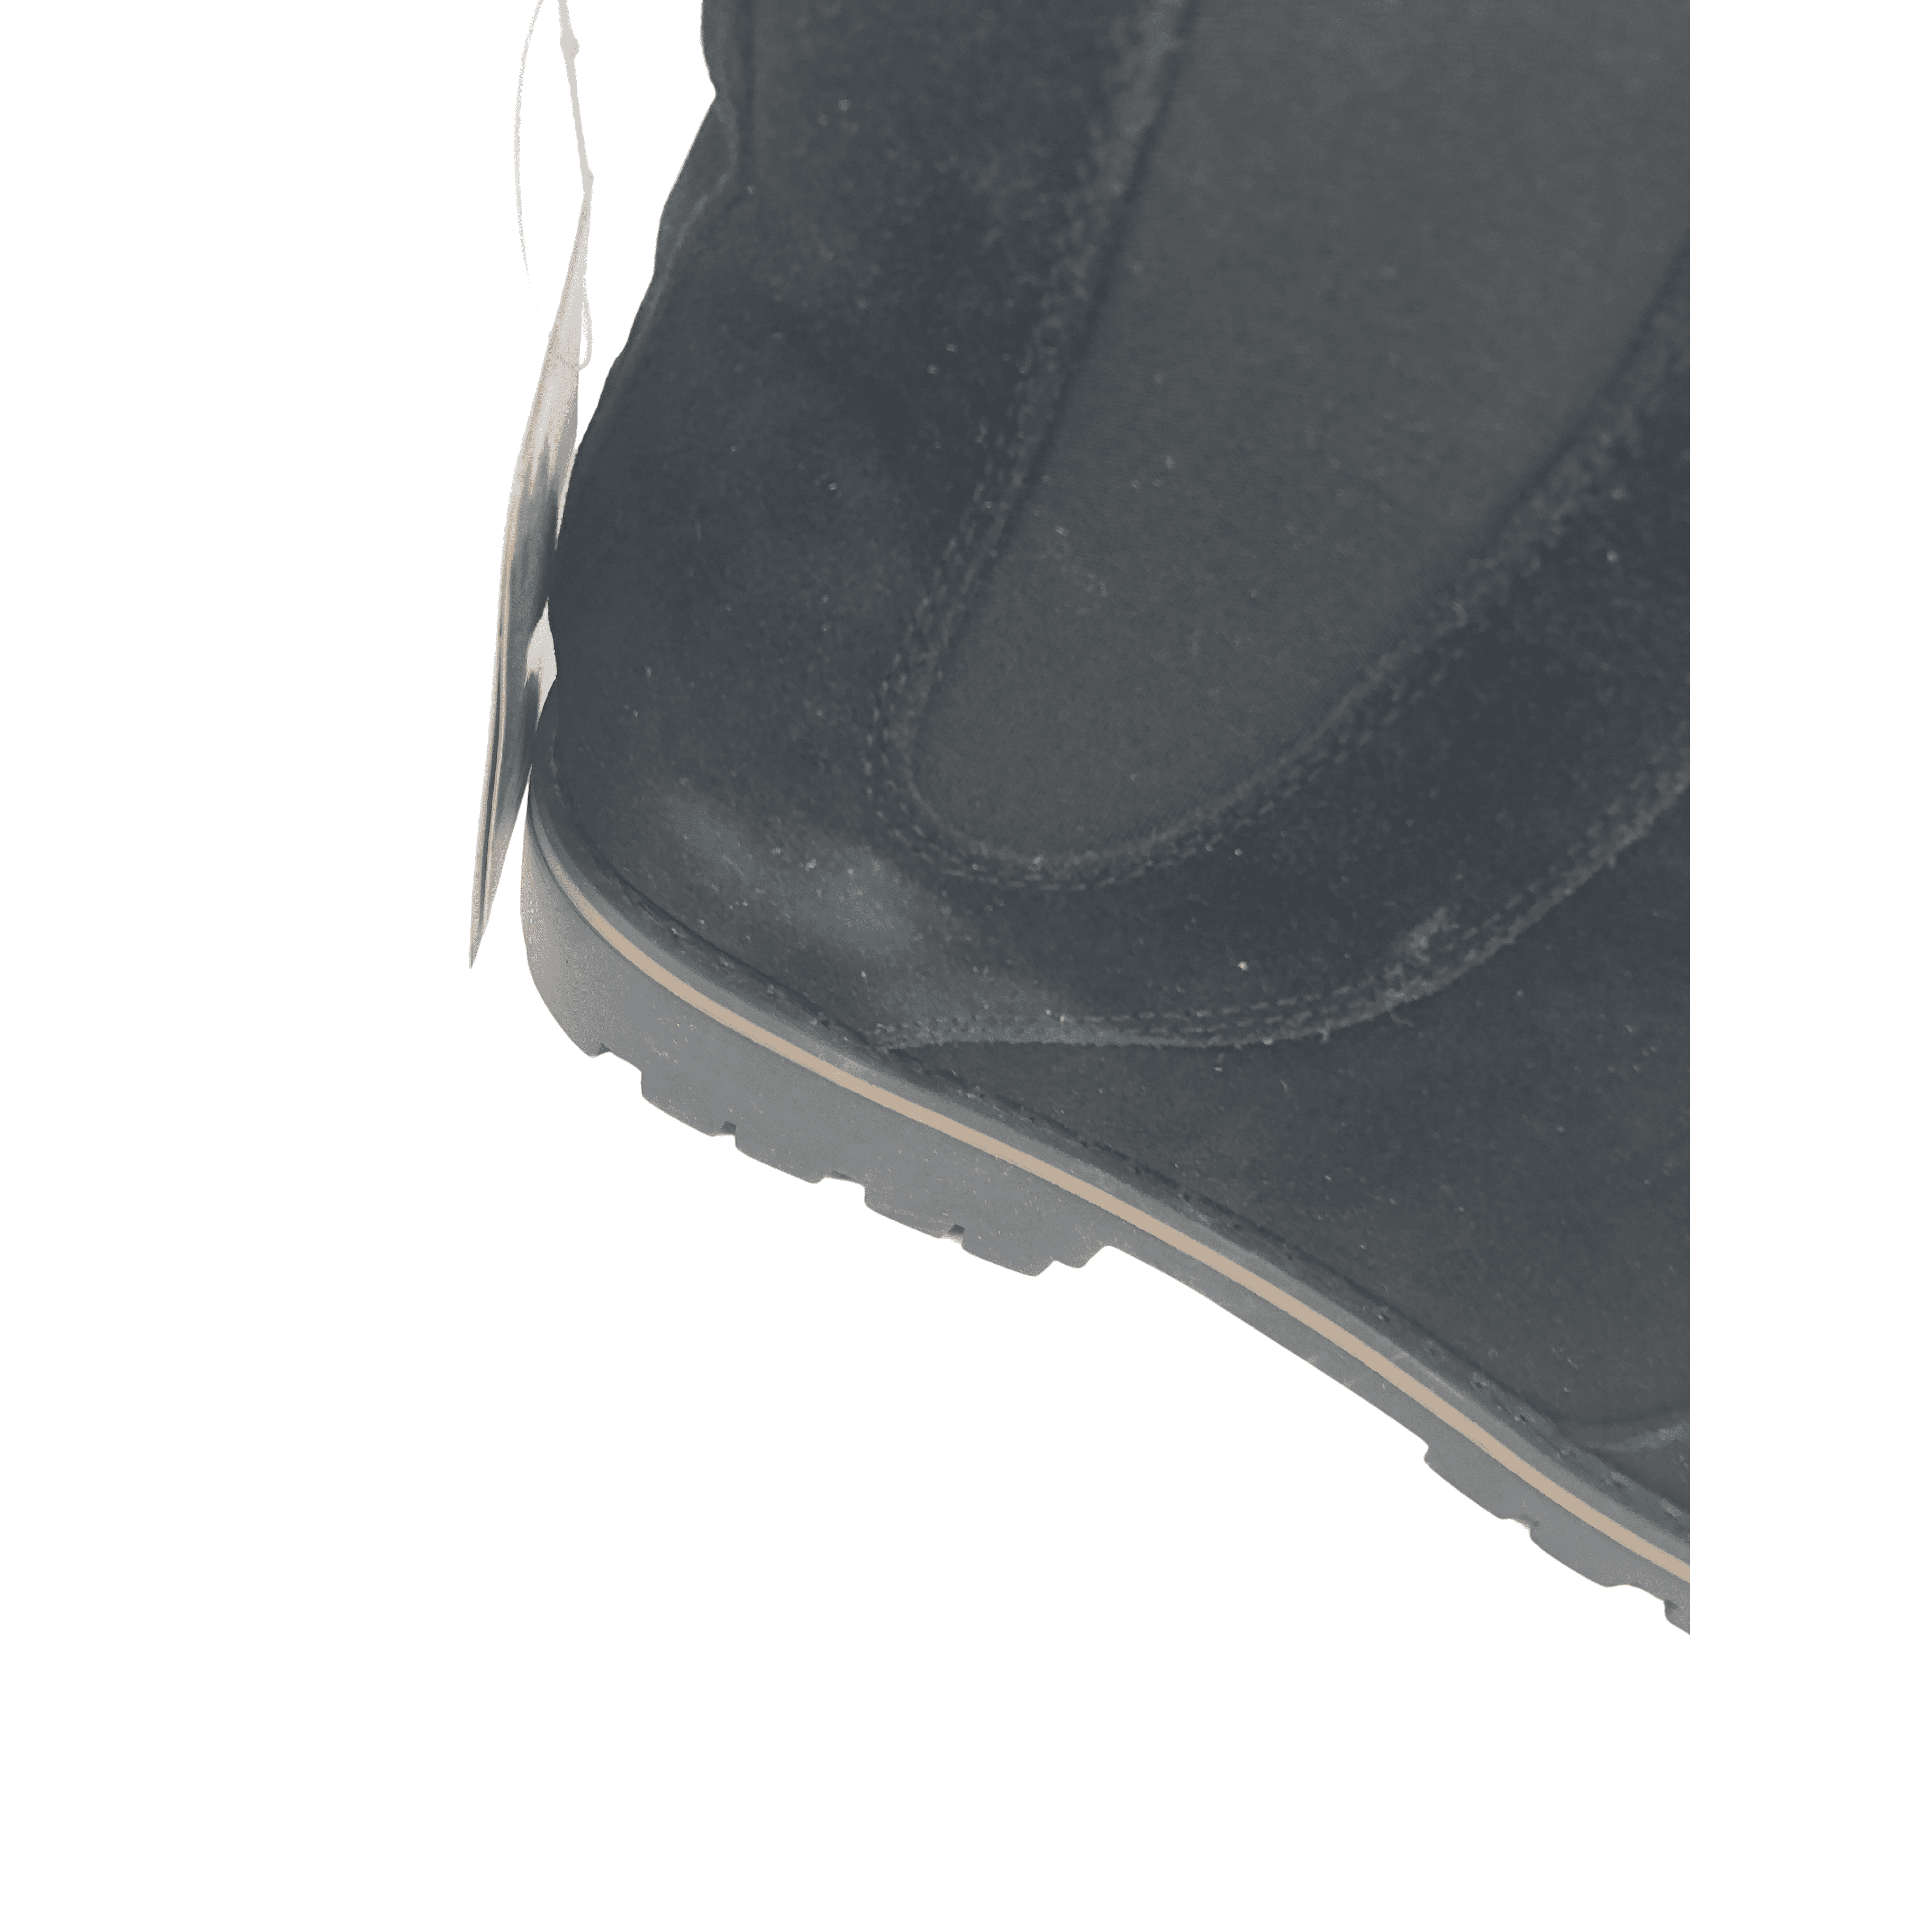 Bearpaw Men's Chelsea Boot / Leather Upper / Double Gore / NeverWet Technology / Black / Size 13